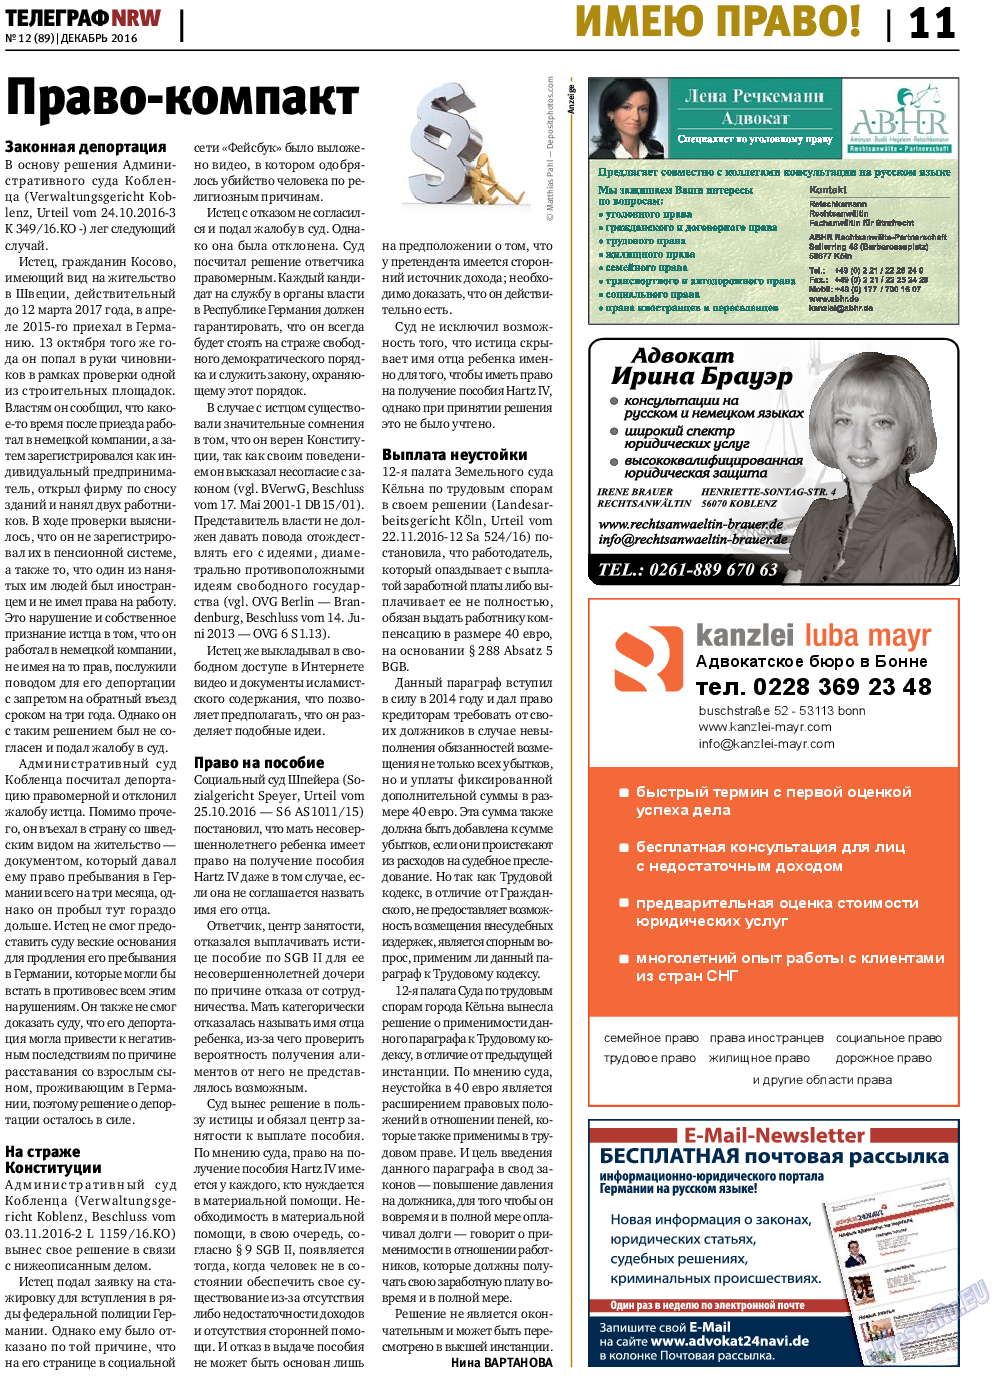 Телеграф NRW, газета. 2016 №12 стр.11